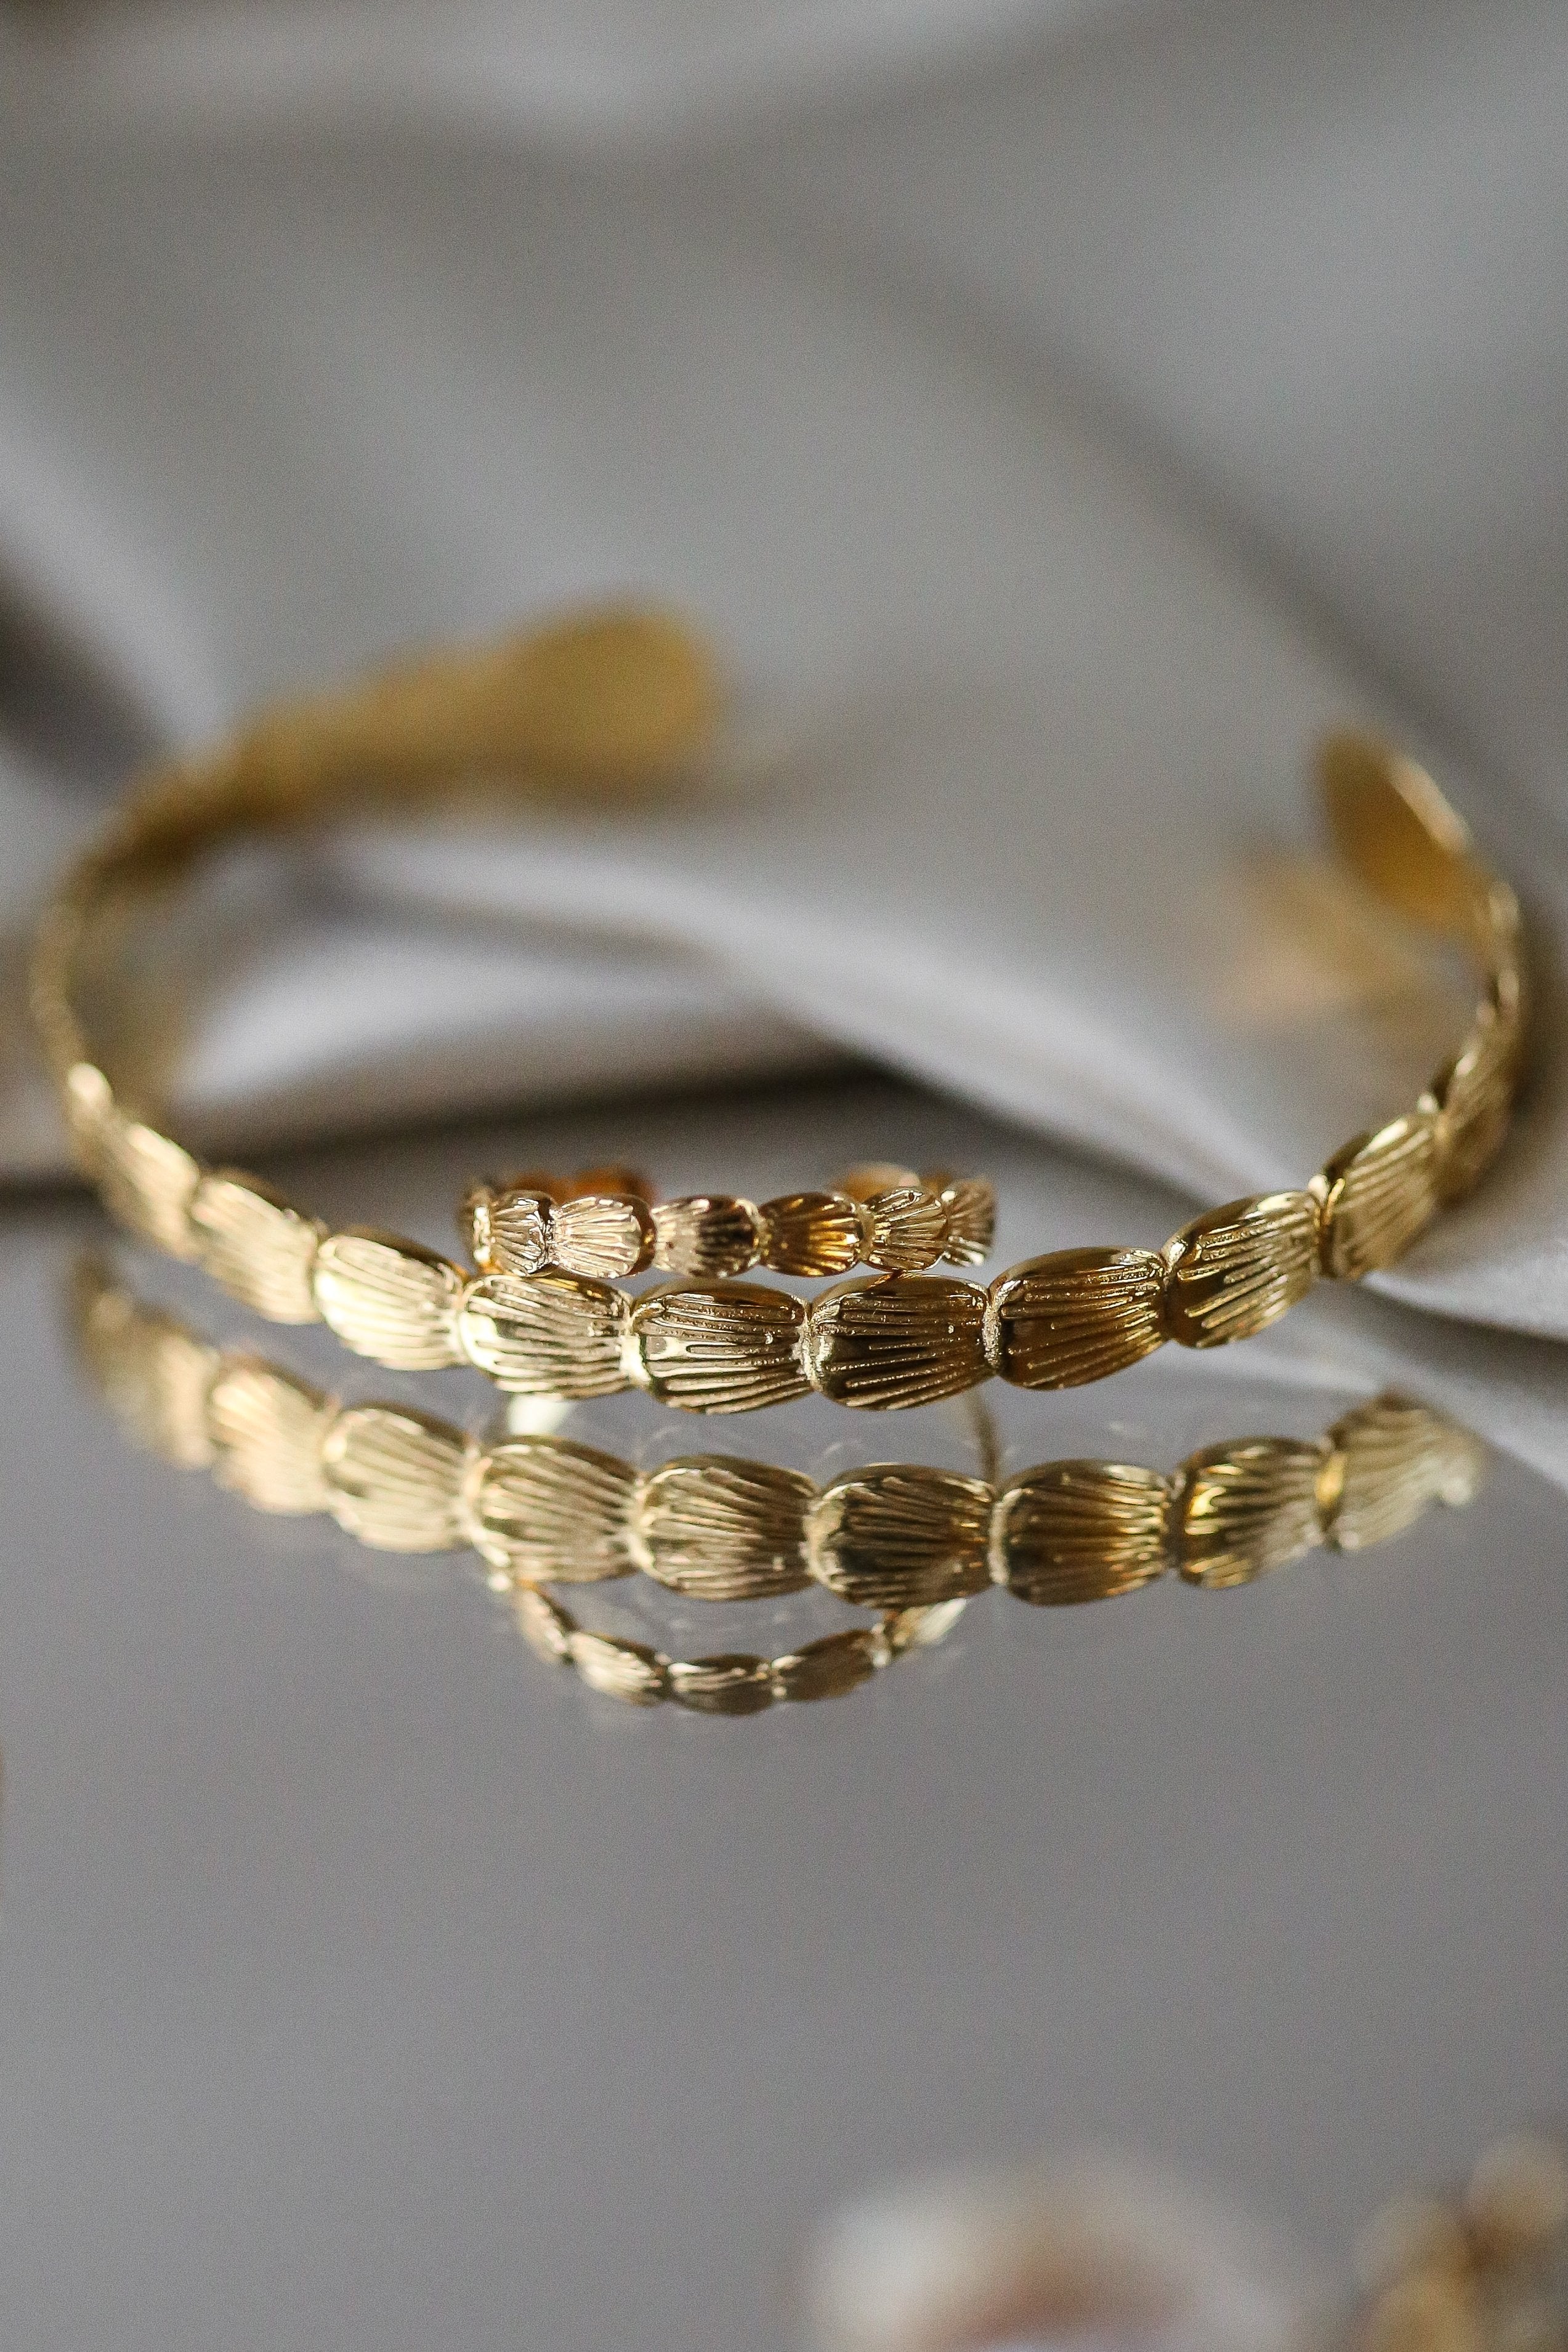 Fleur Ring - Boutique Minimaliste has waterproof, durable, elegant and vintage inspired jewelry